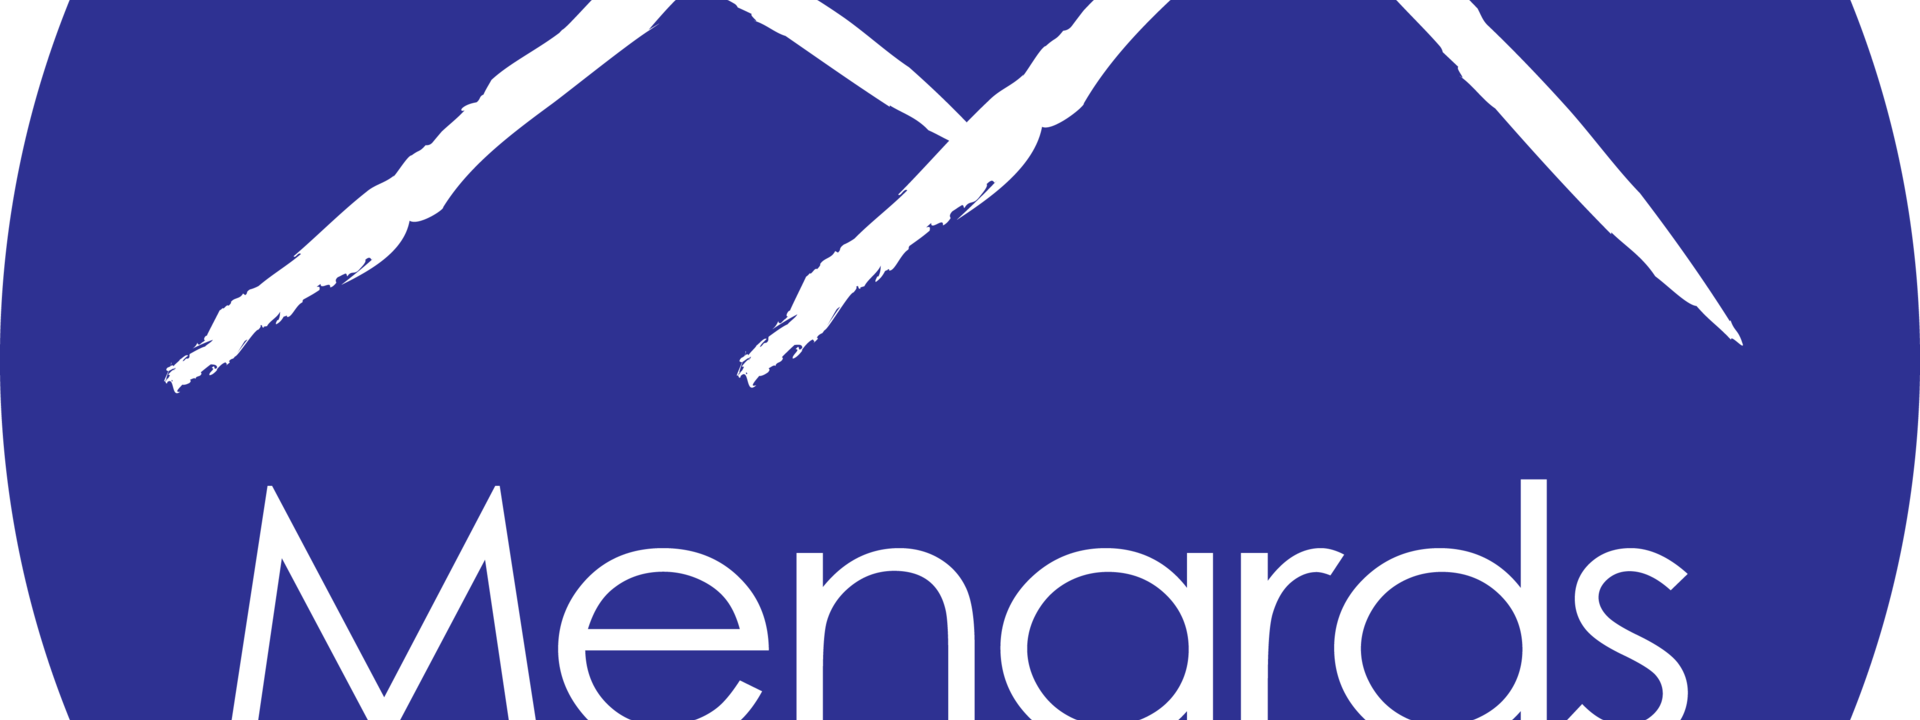 menardsnz-logo-final.png